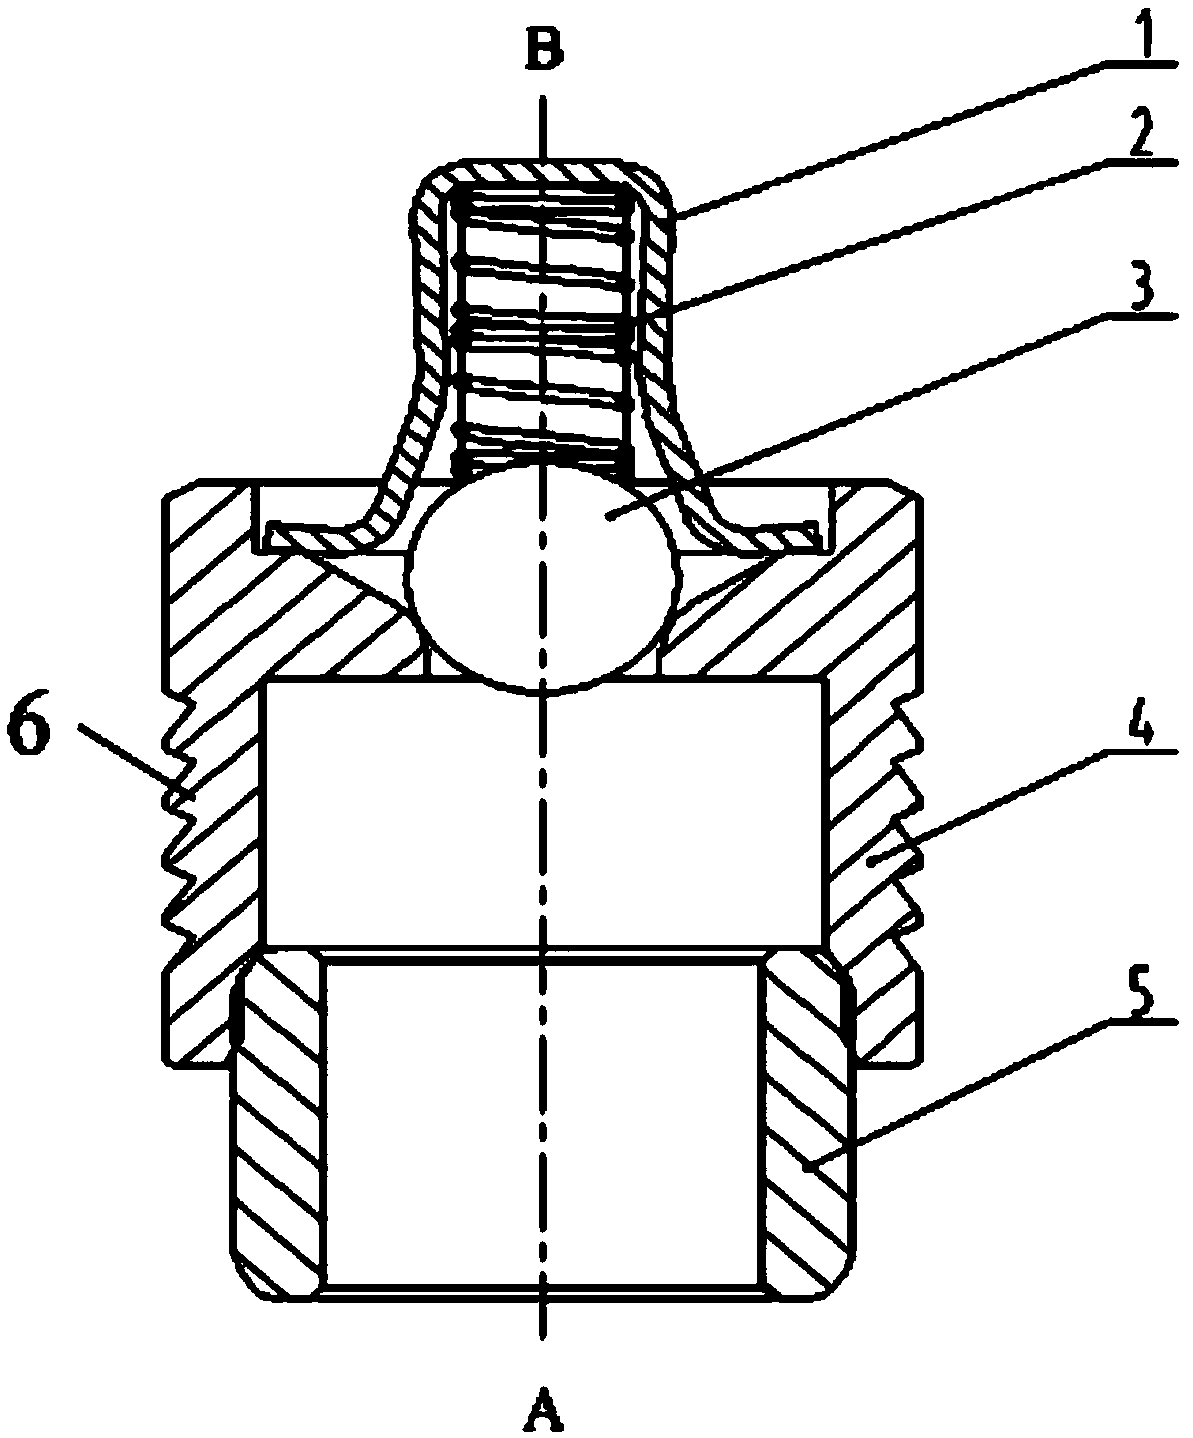 Embedded one-way valve